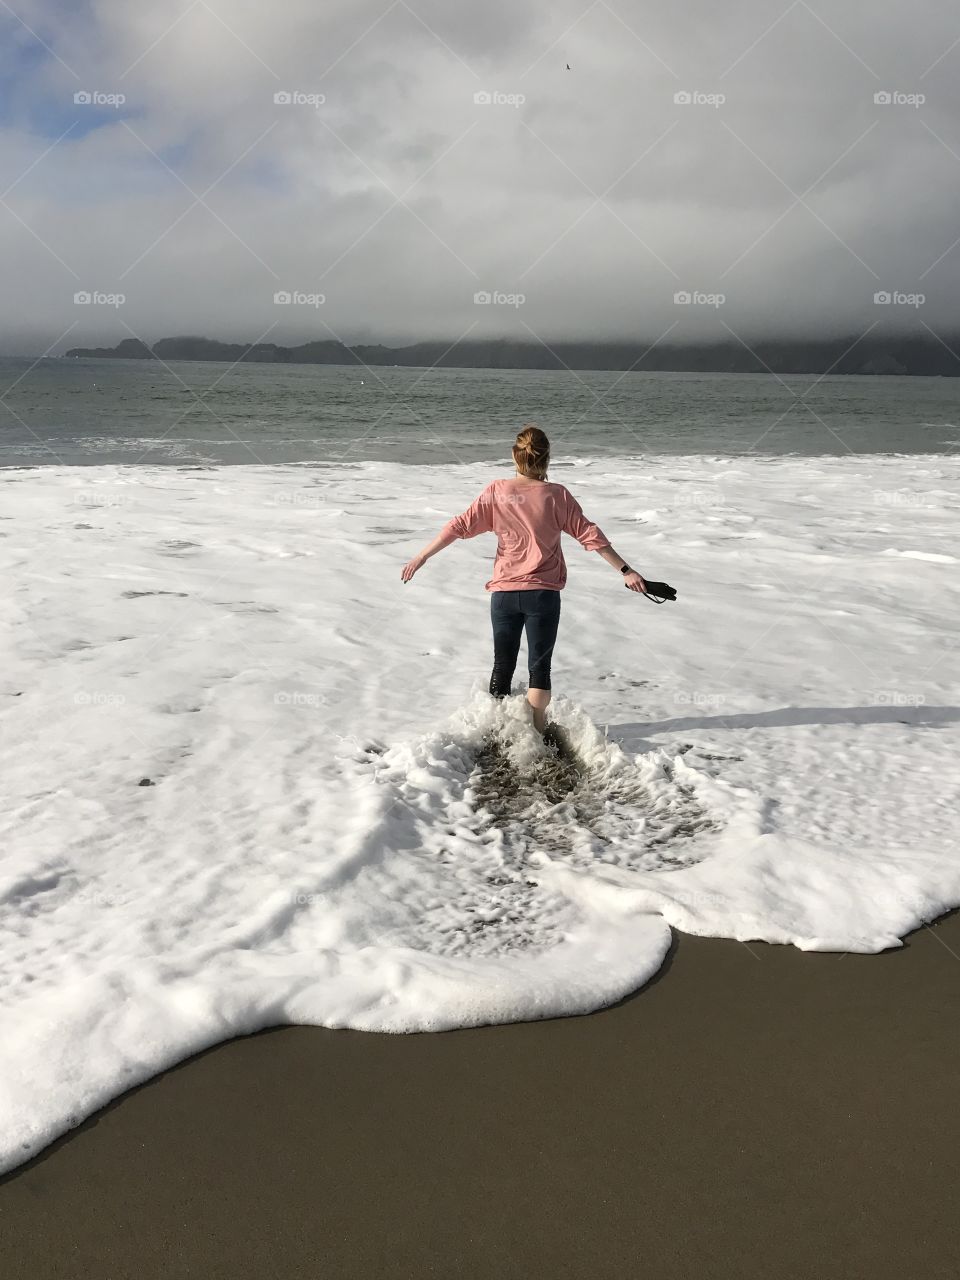 Feet in the ocean - san Francisco bay